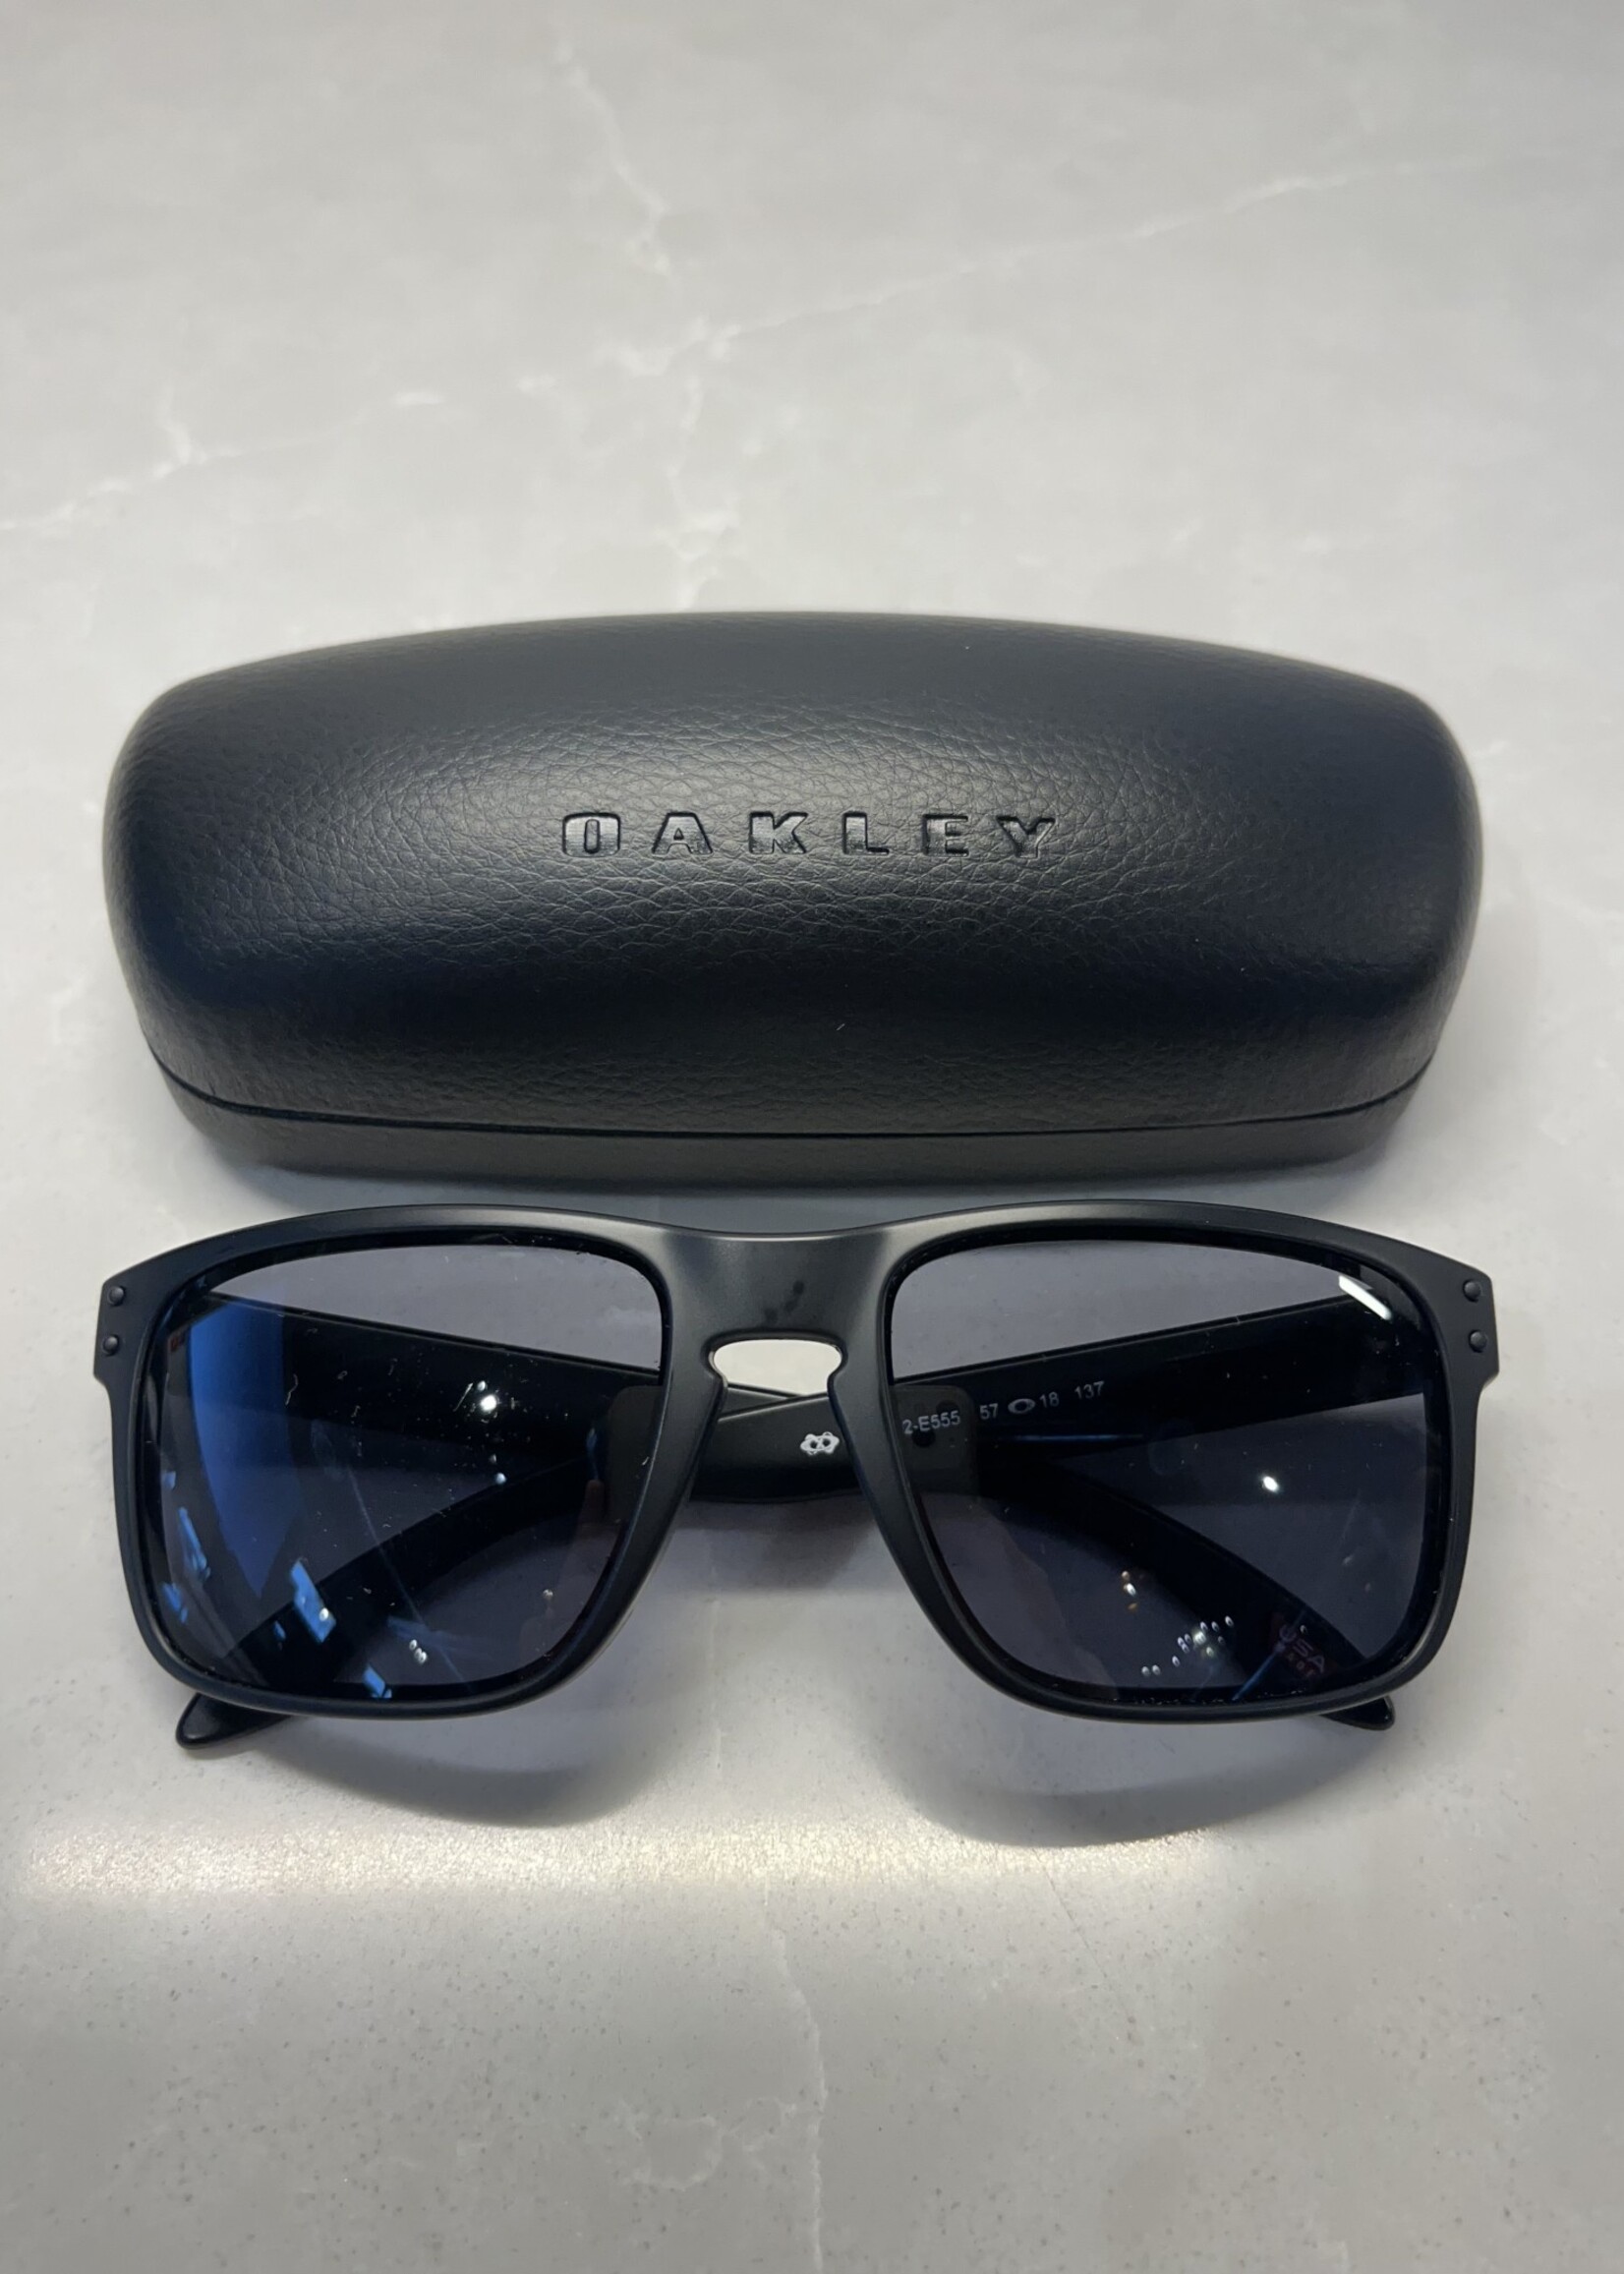 Oakley Black Men's Sunglasses WITH CASE - ALT REBEL